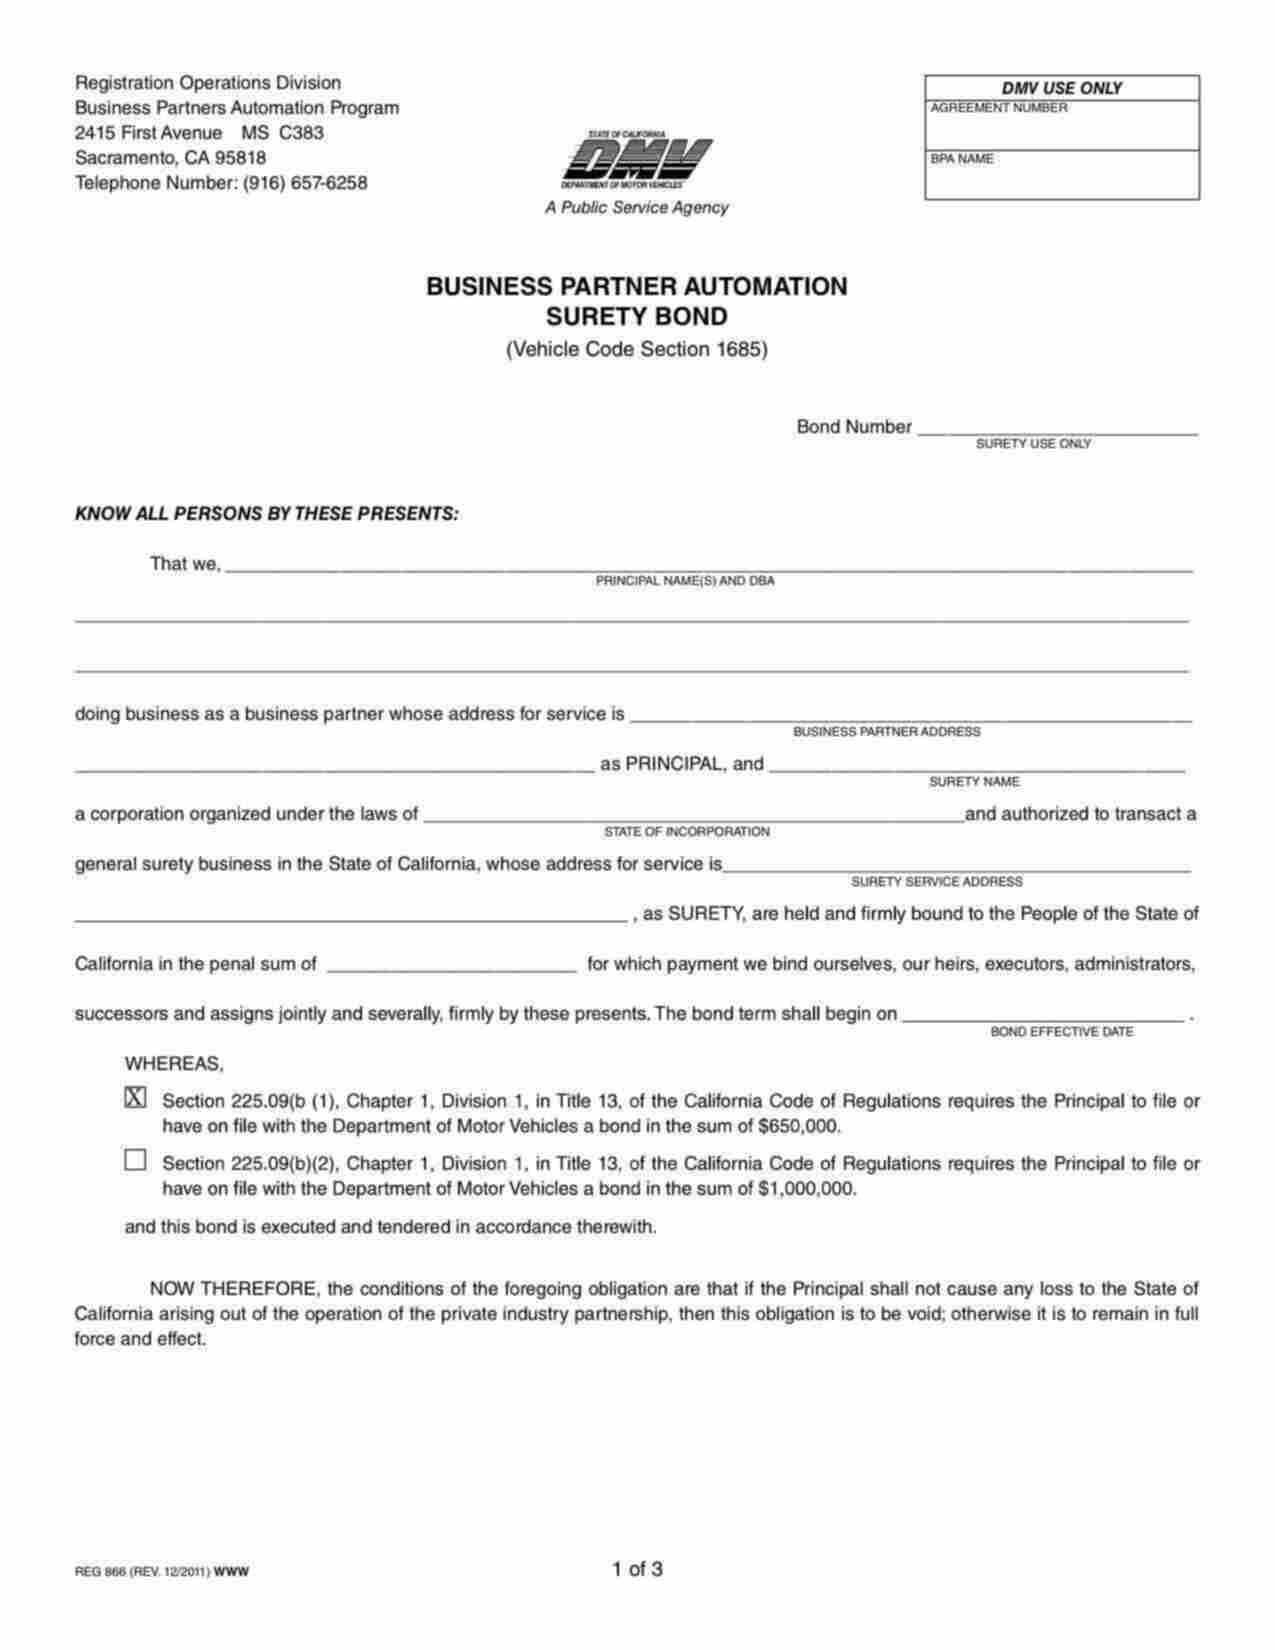 California Business Partner Automation (DMV) Bond Form